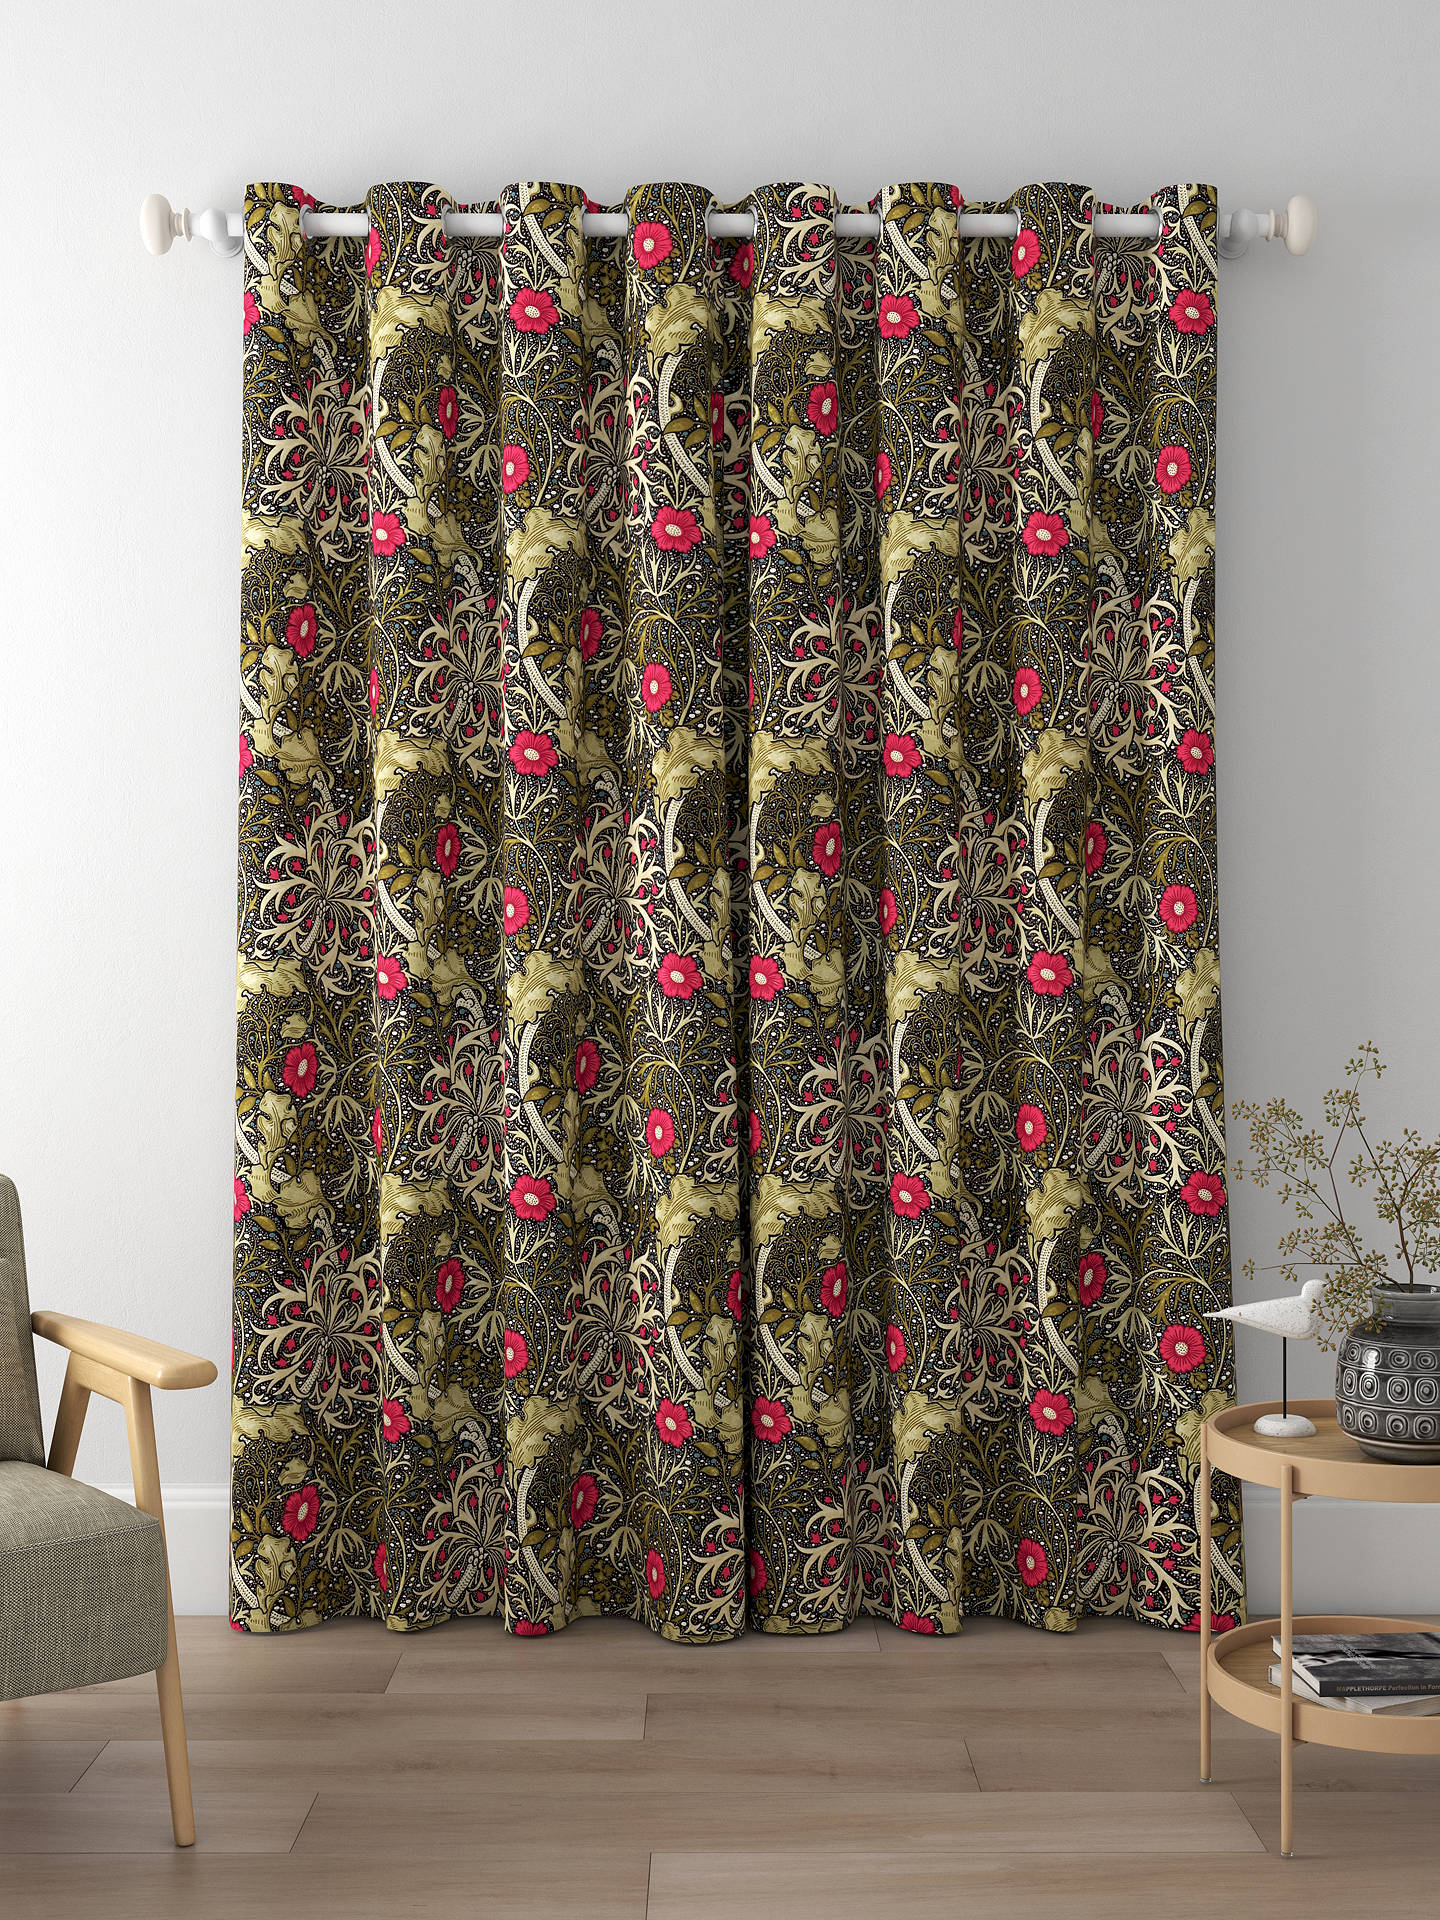 Morris & Co. Seaweed Made to Measure Curtains, Ebony/Poppy